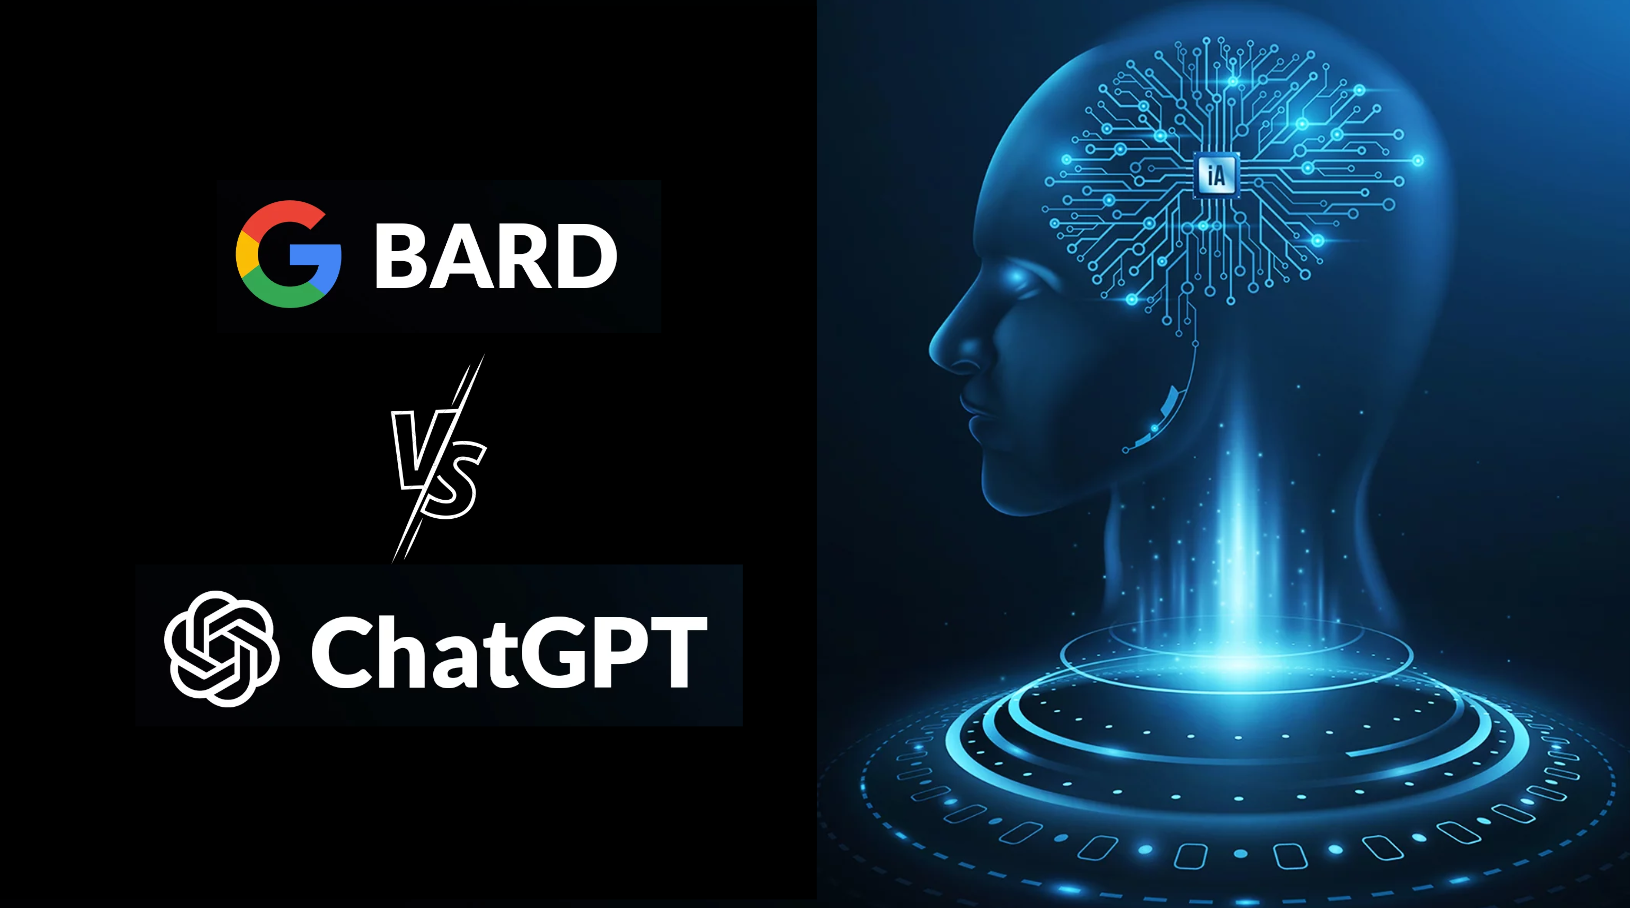 Chat GPT vs Googlr bard